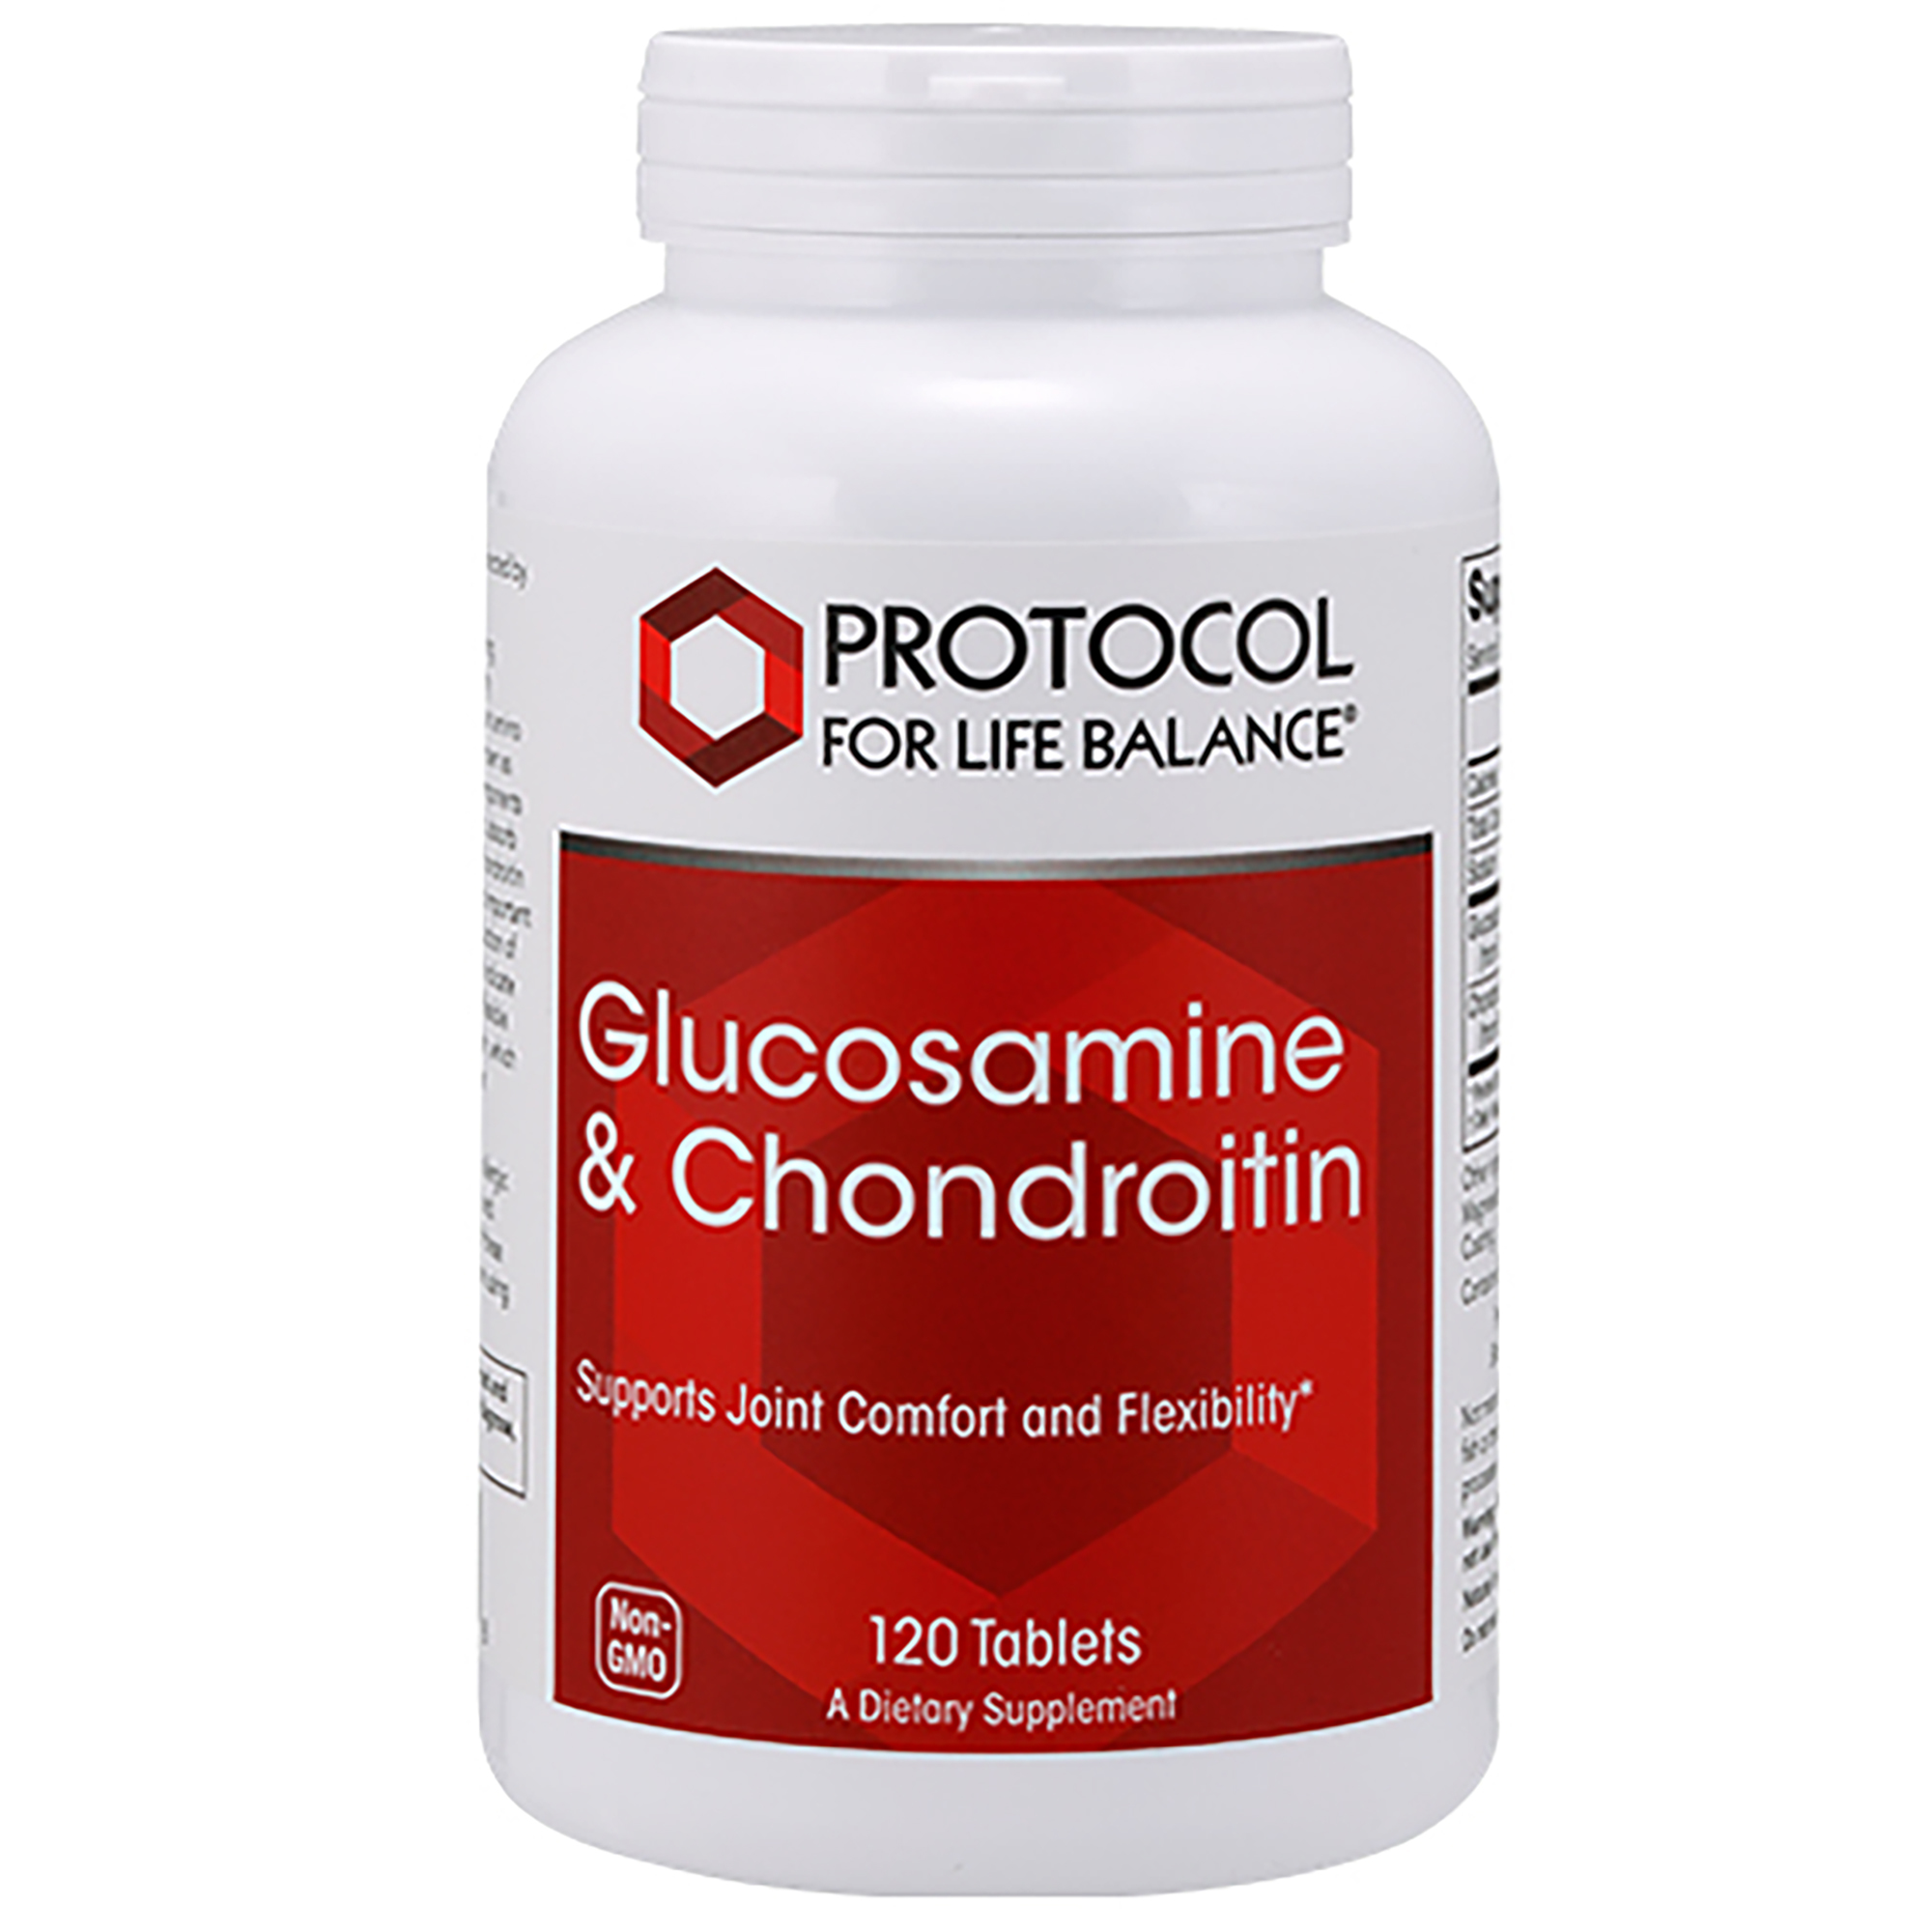 Benefits of Glucosamine Supplements